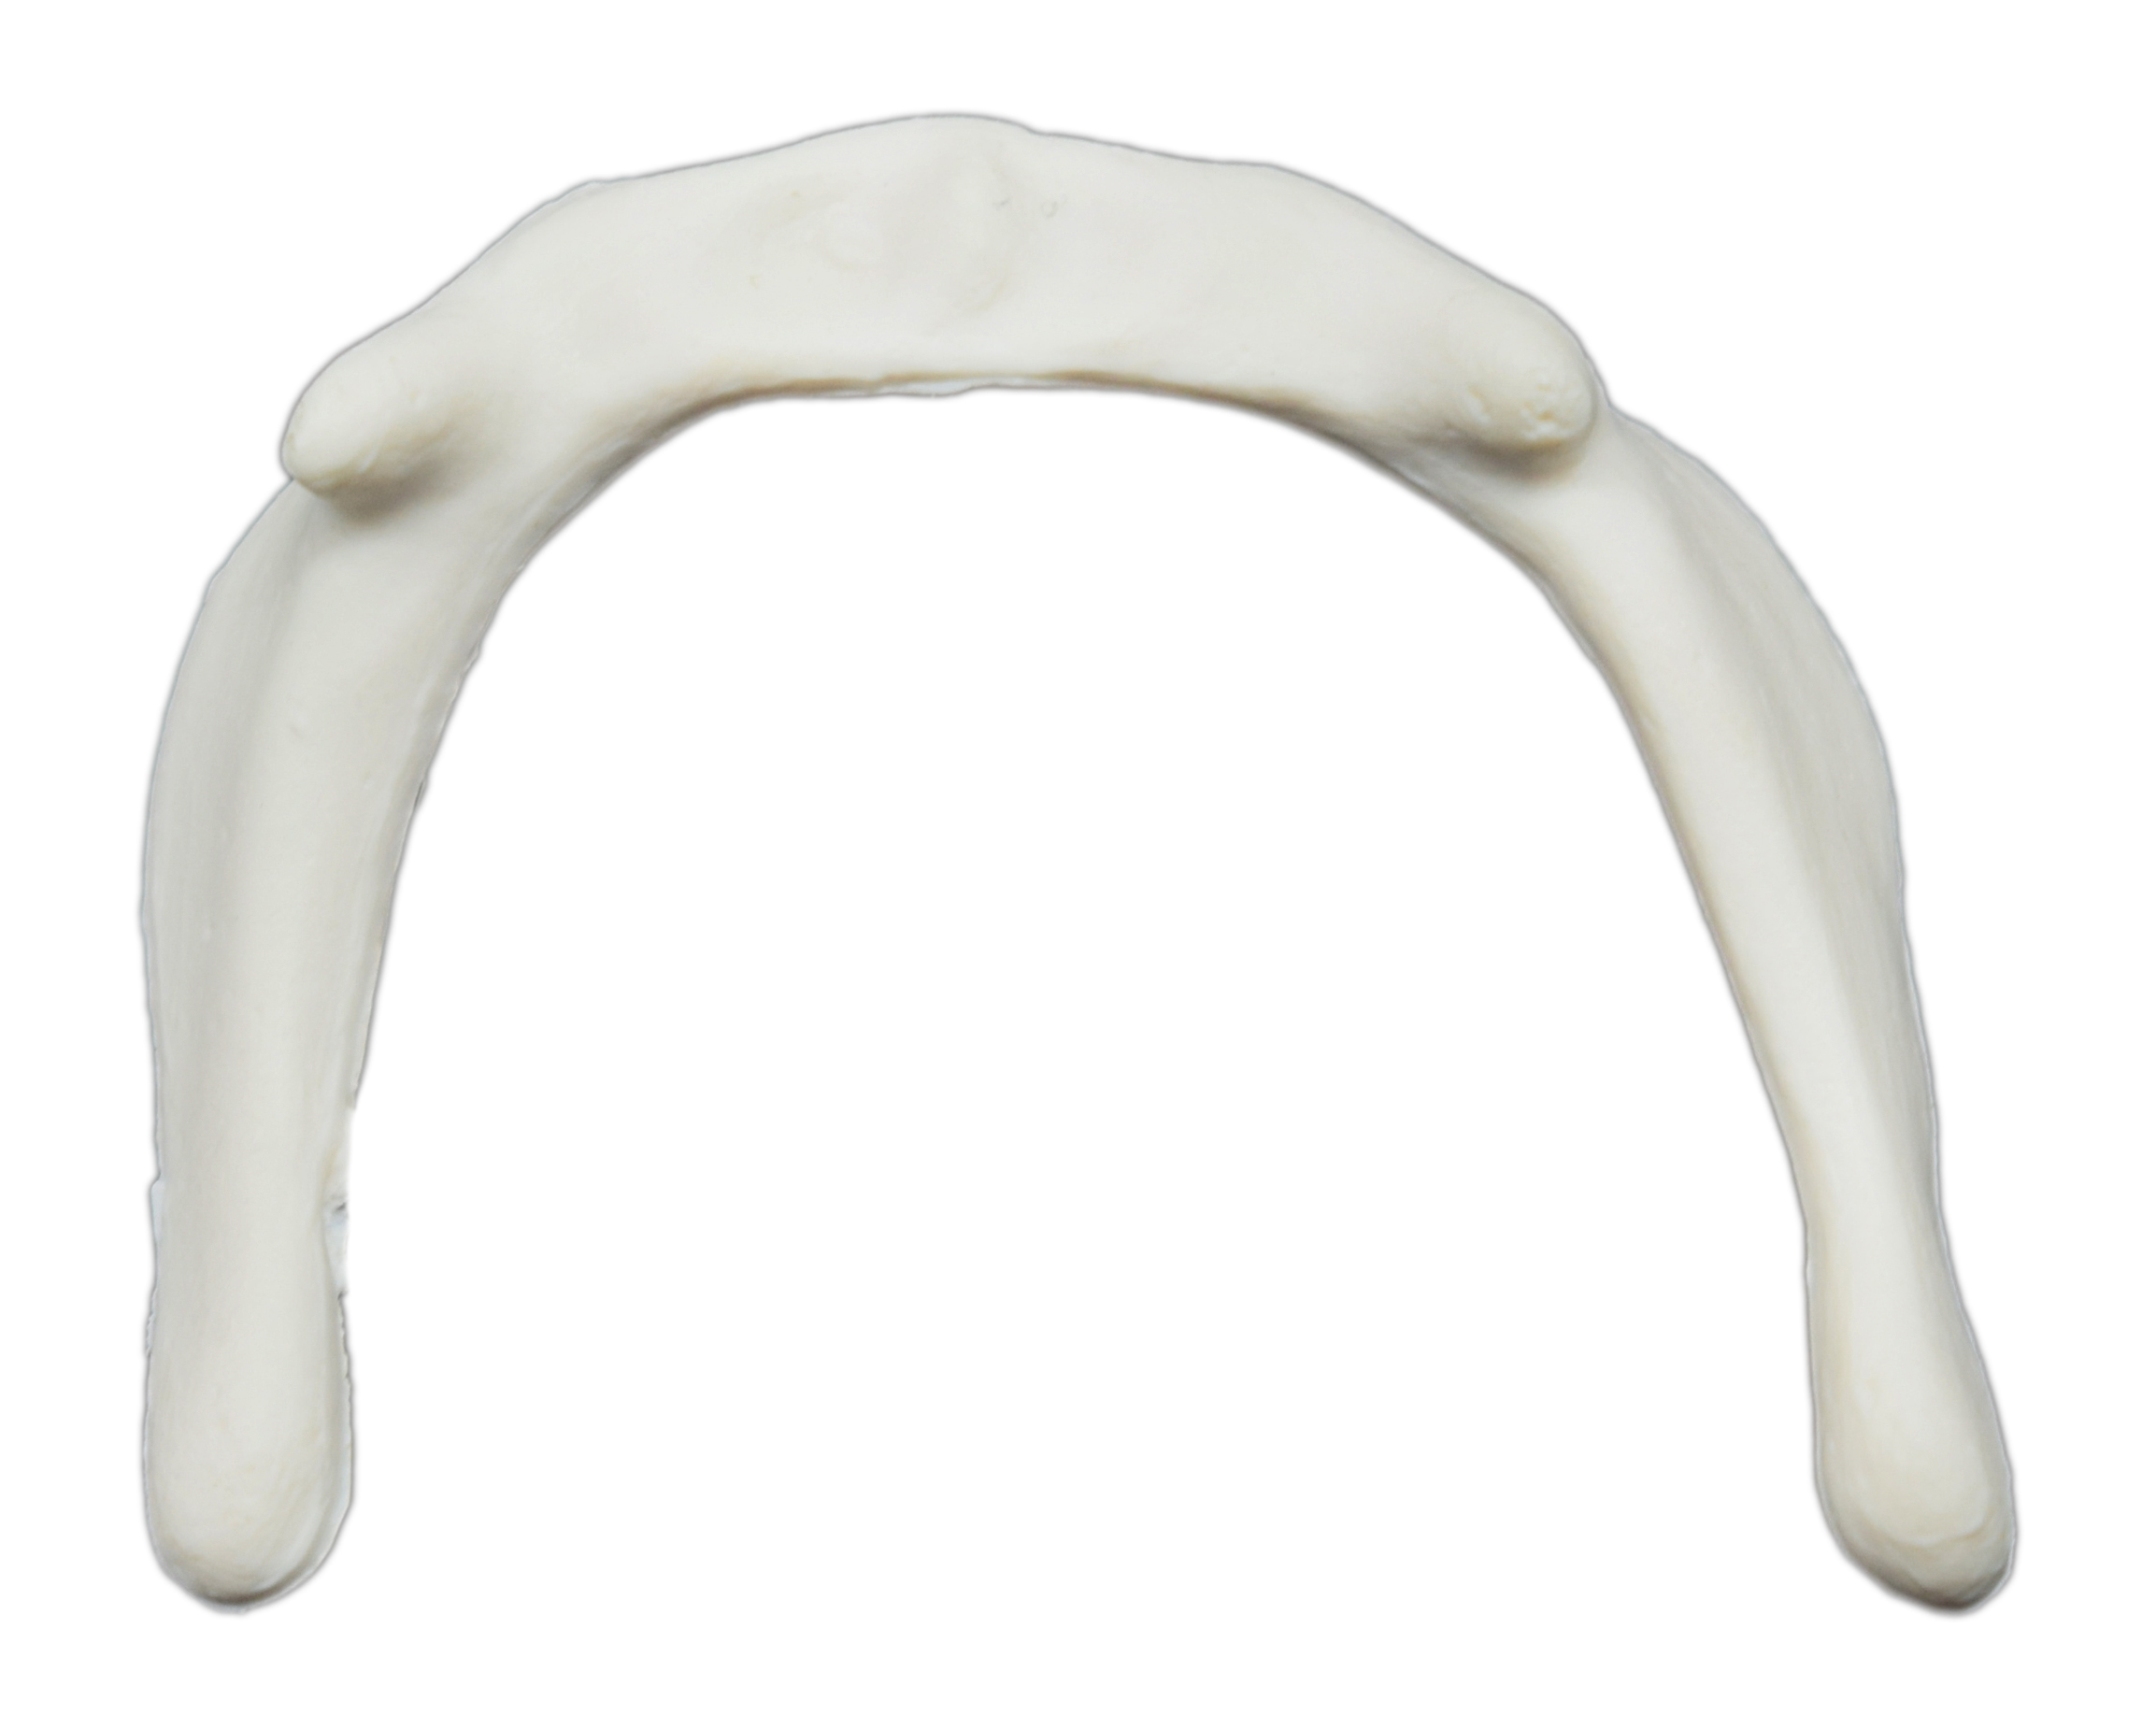 Hyoid Bone Model - Anatomically Accurate, Detailed Human Bone Replica